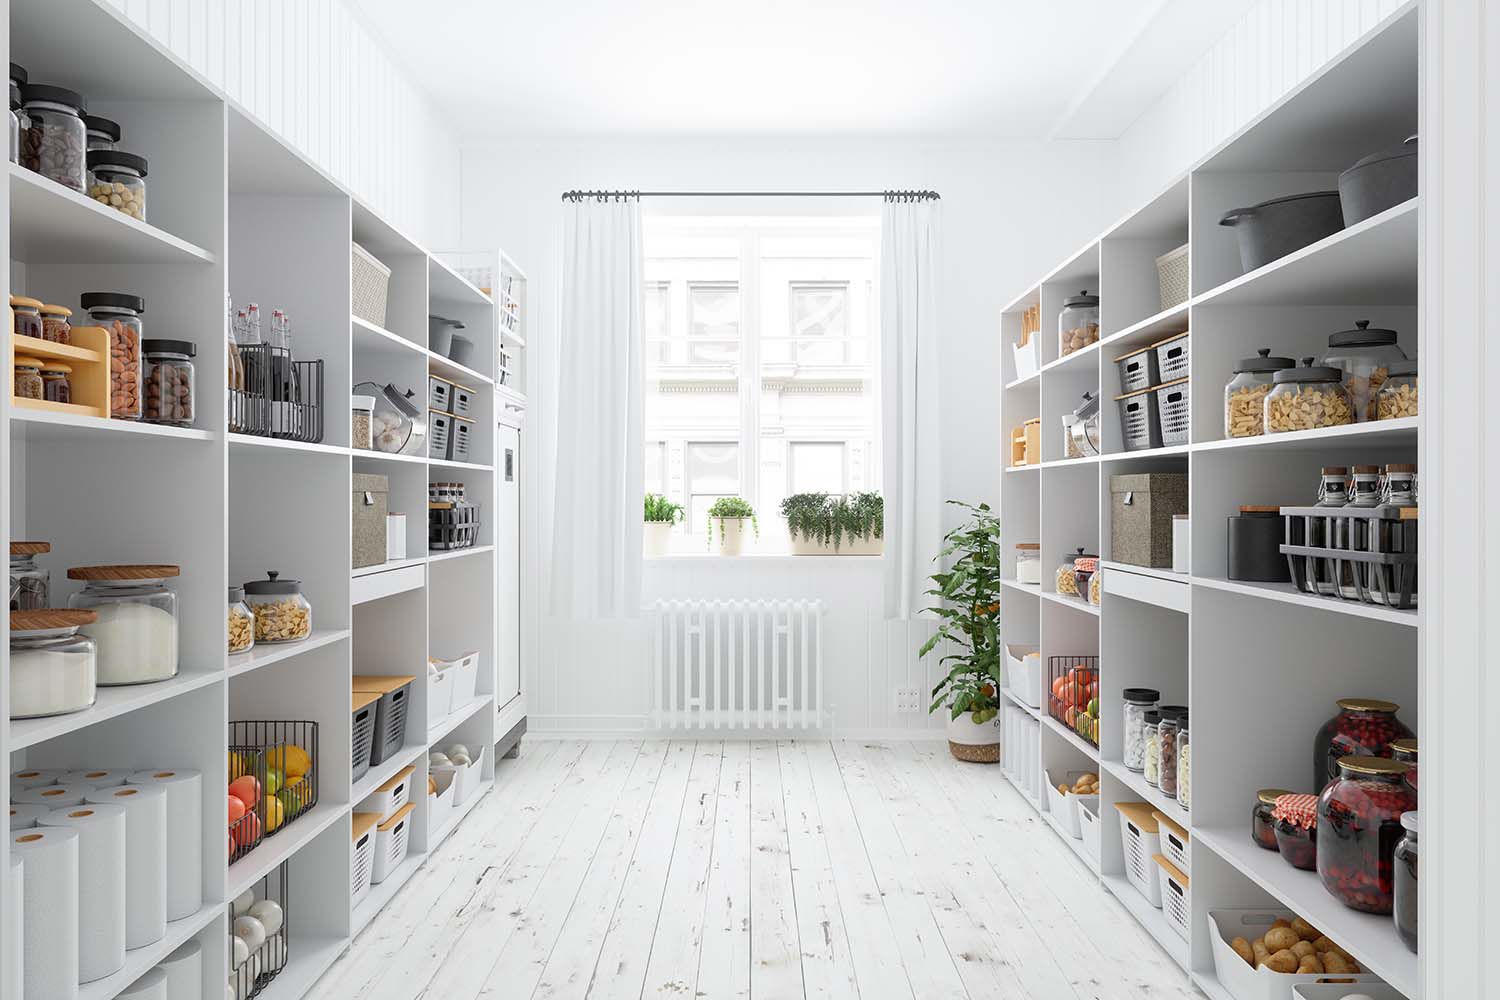 Storage Room With Organized Pantry Items